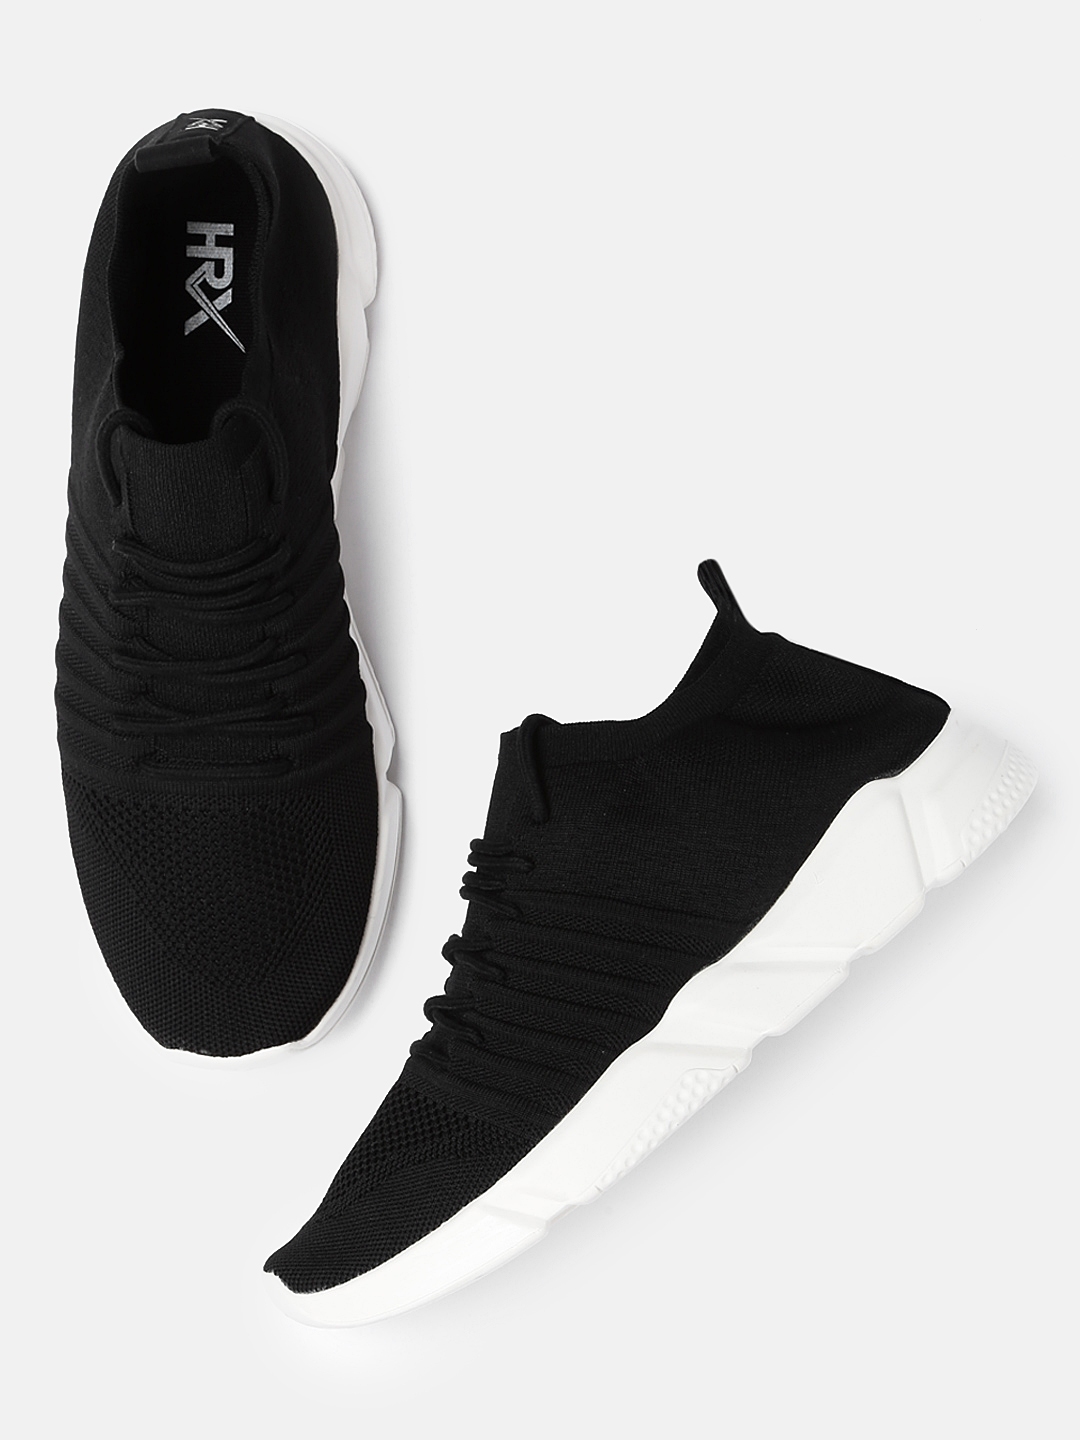 hrx black running shoes